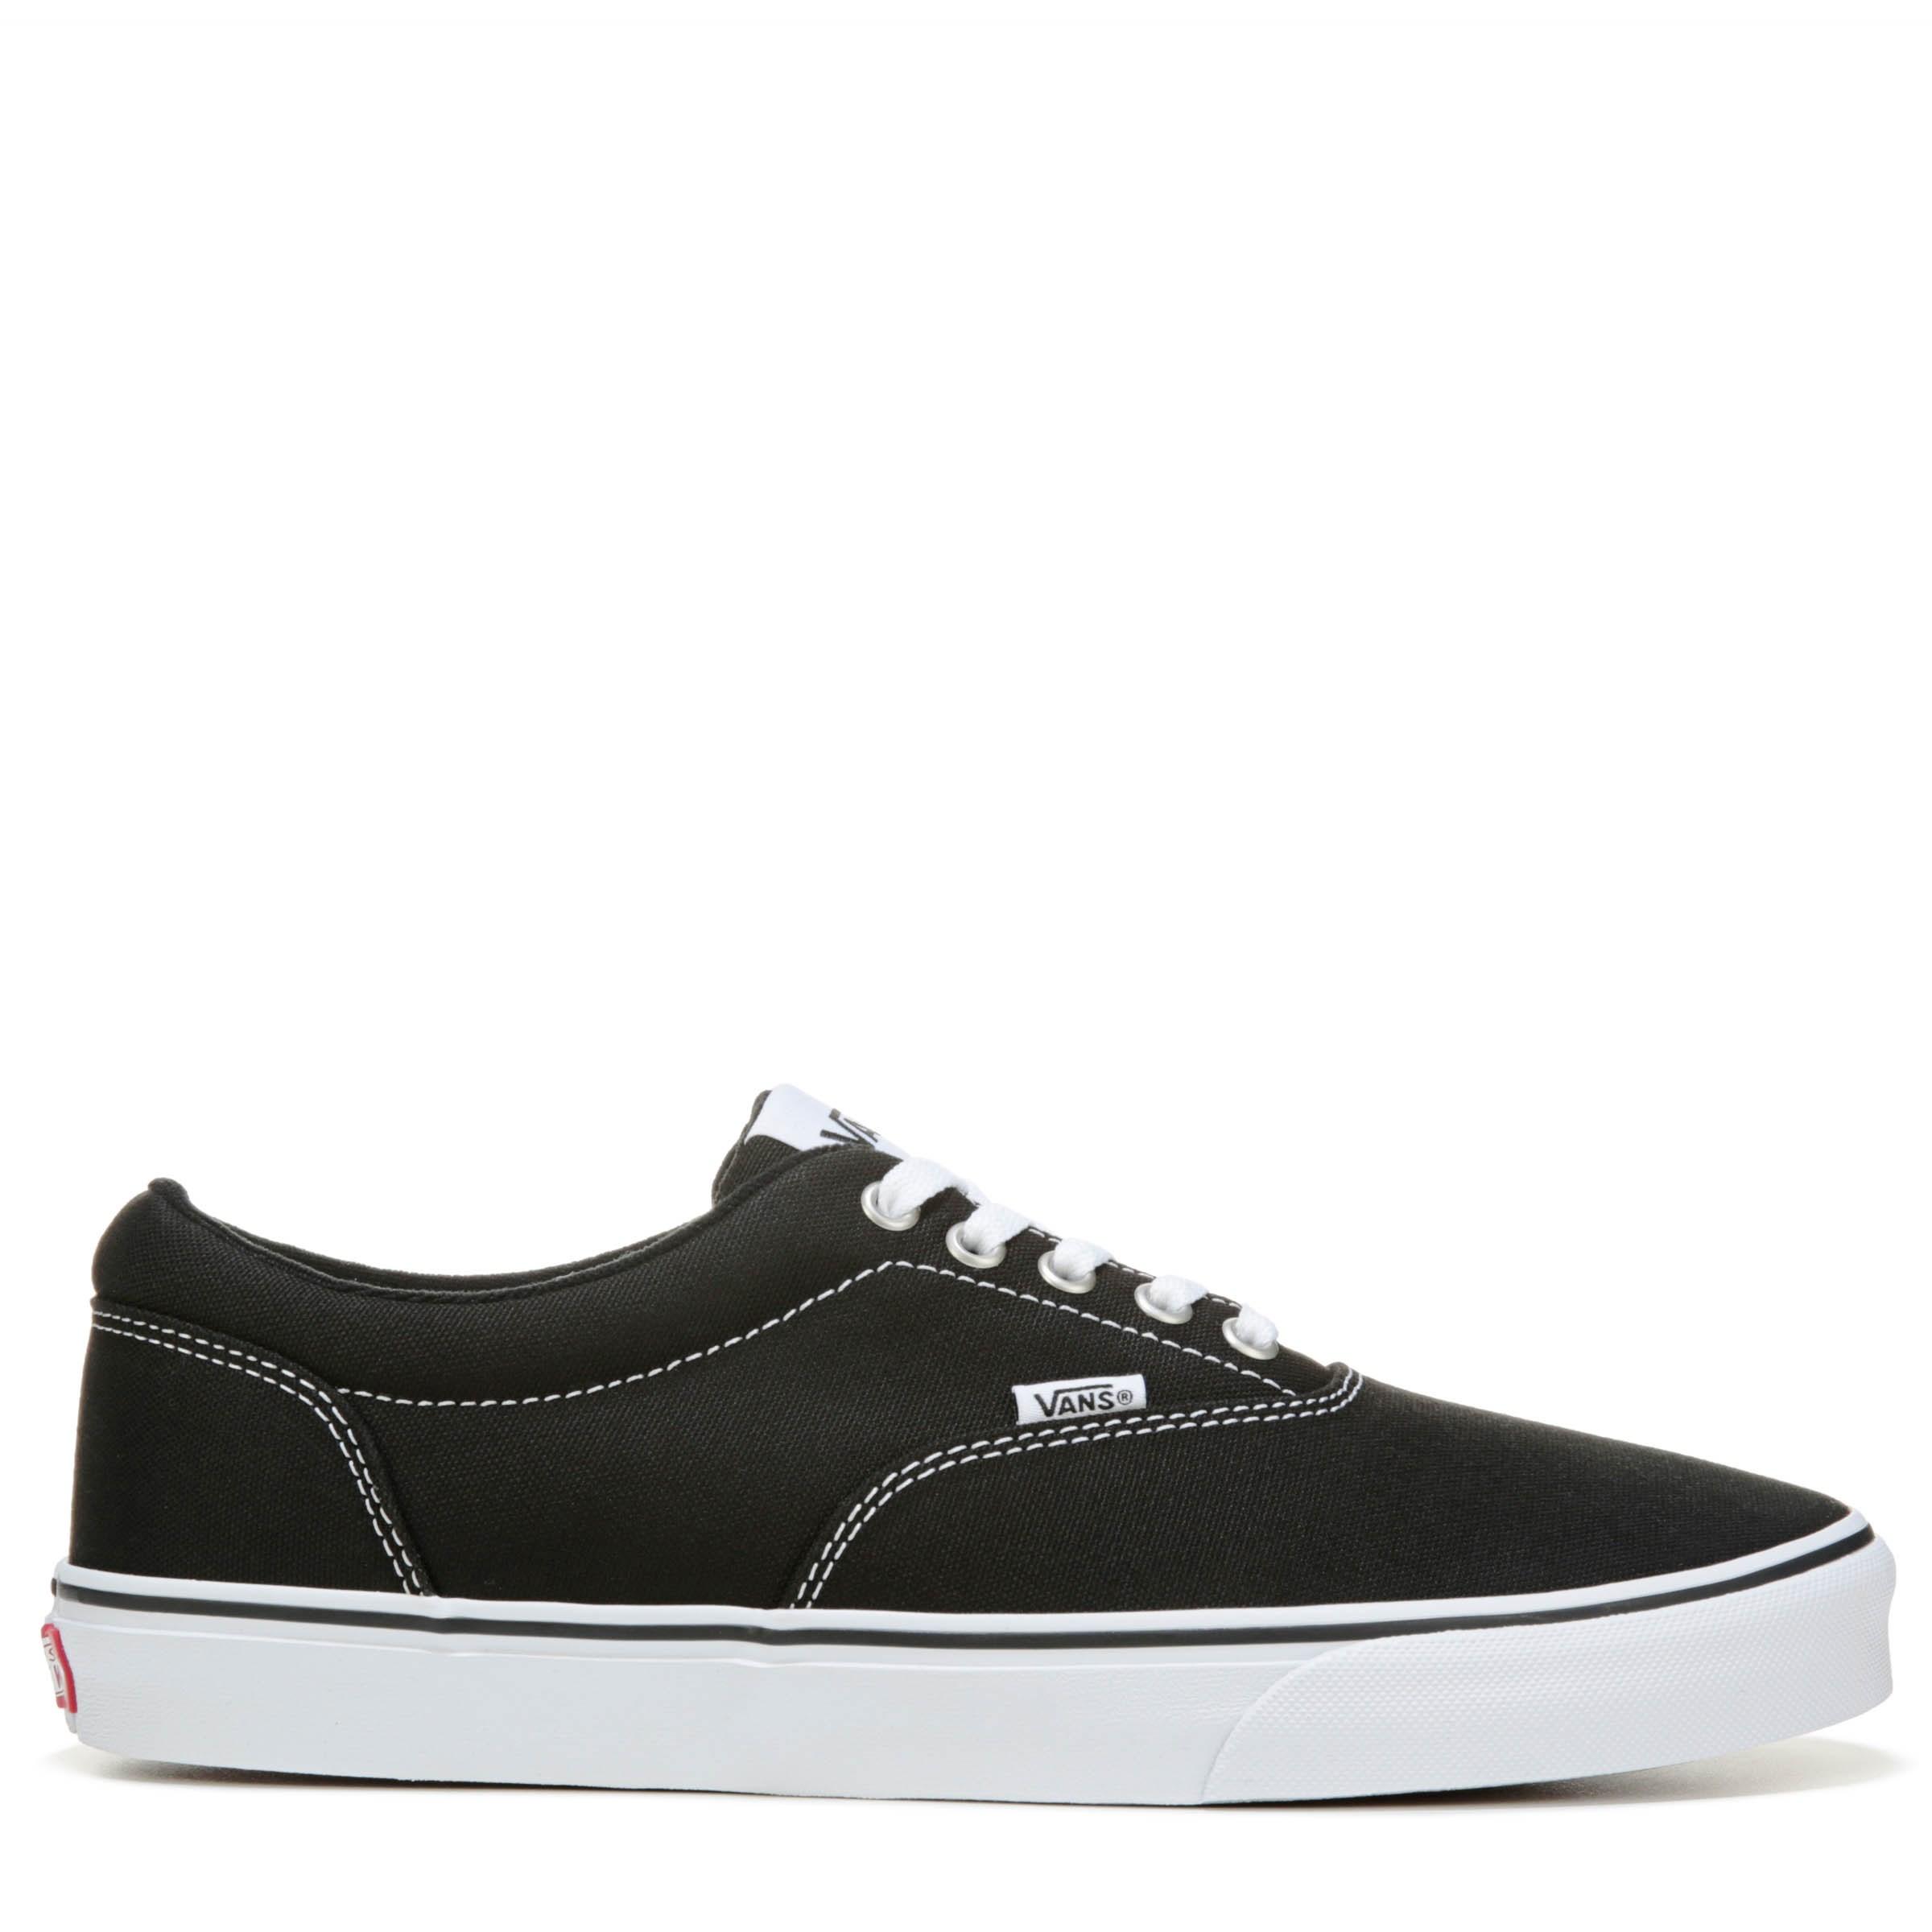 Vans Canvas Doheny Low Top Sneakers in Black/White (Black) for Men - Lyst